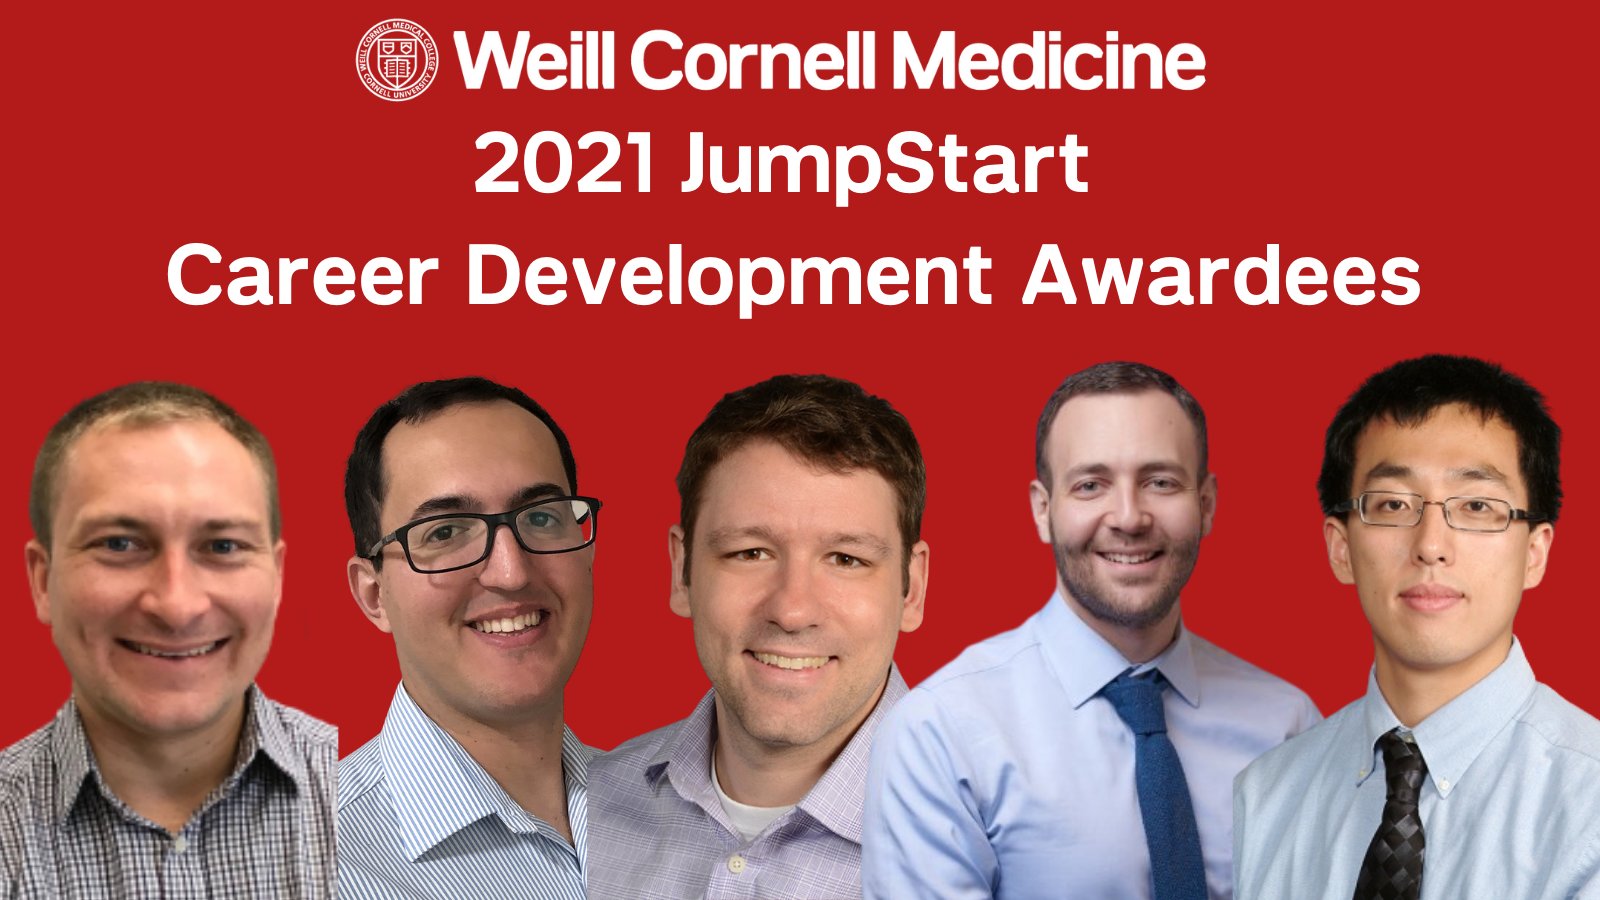 Dr. Nicholas Brady received the JumpStart Research Career Development Award at Weill Cornell Medicine